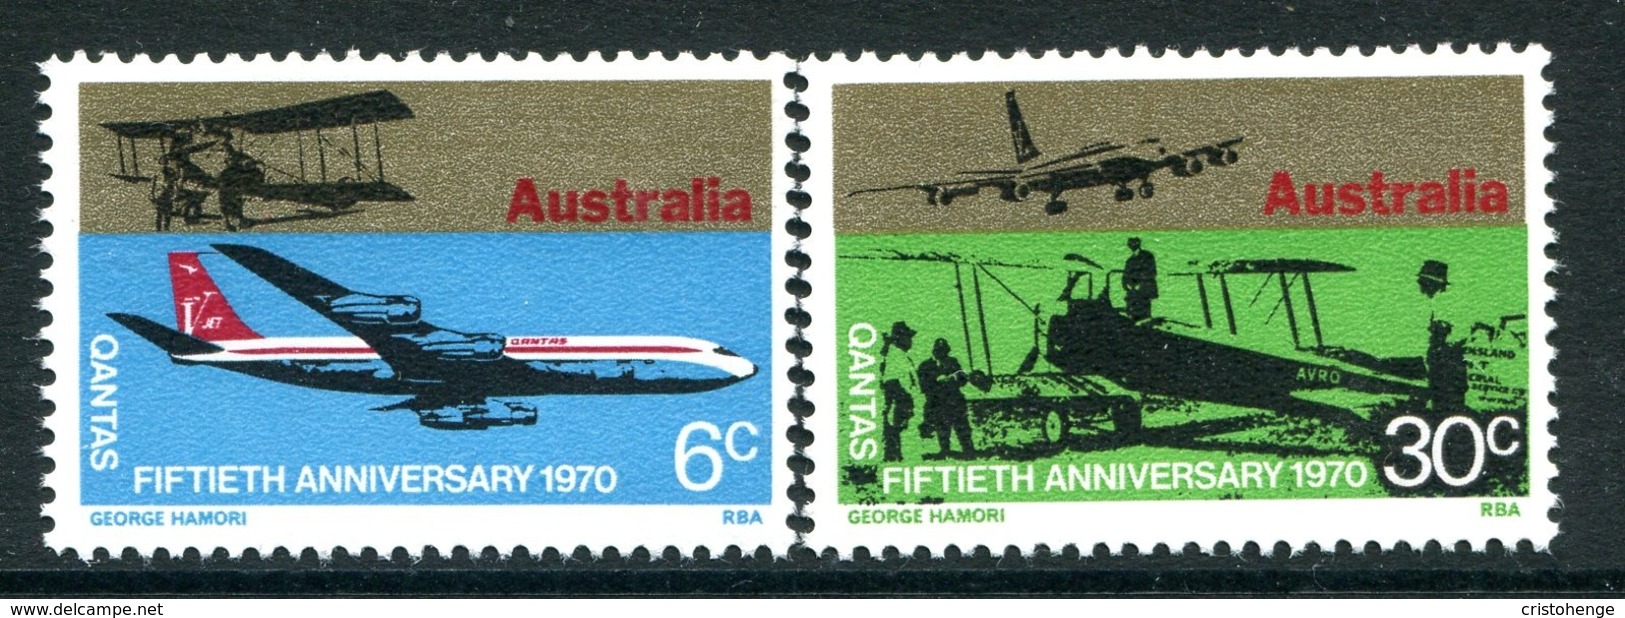 Australia 1970 50th Anniversary Of QANTAS Airline Set MNH (SG 477-478) - Mint Stamps